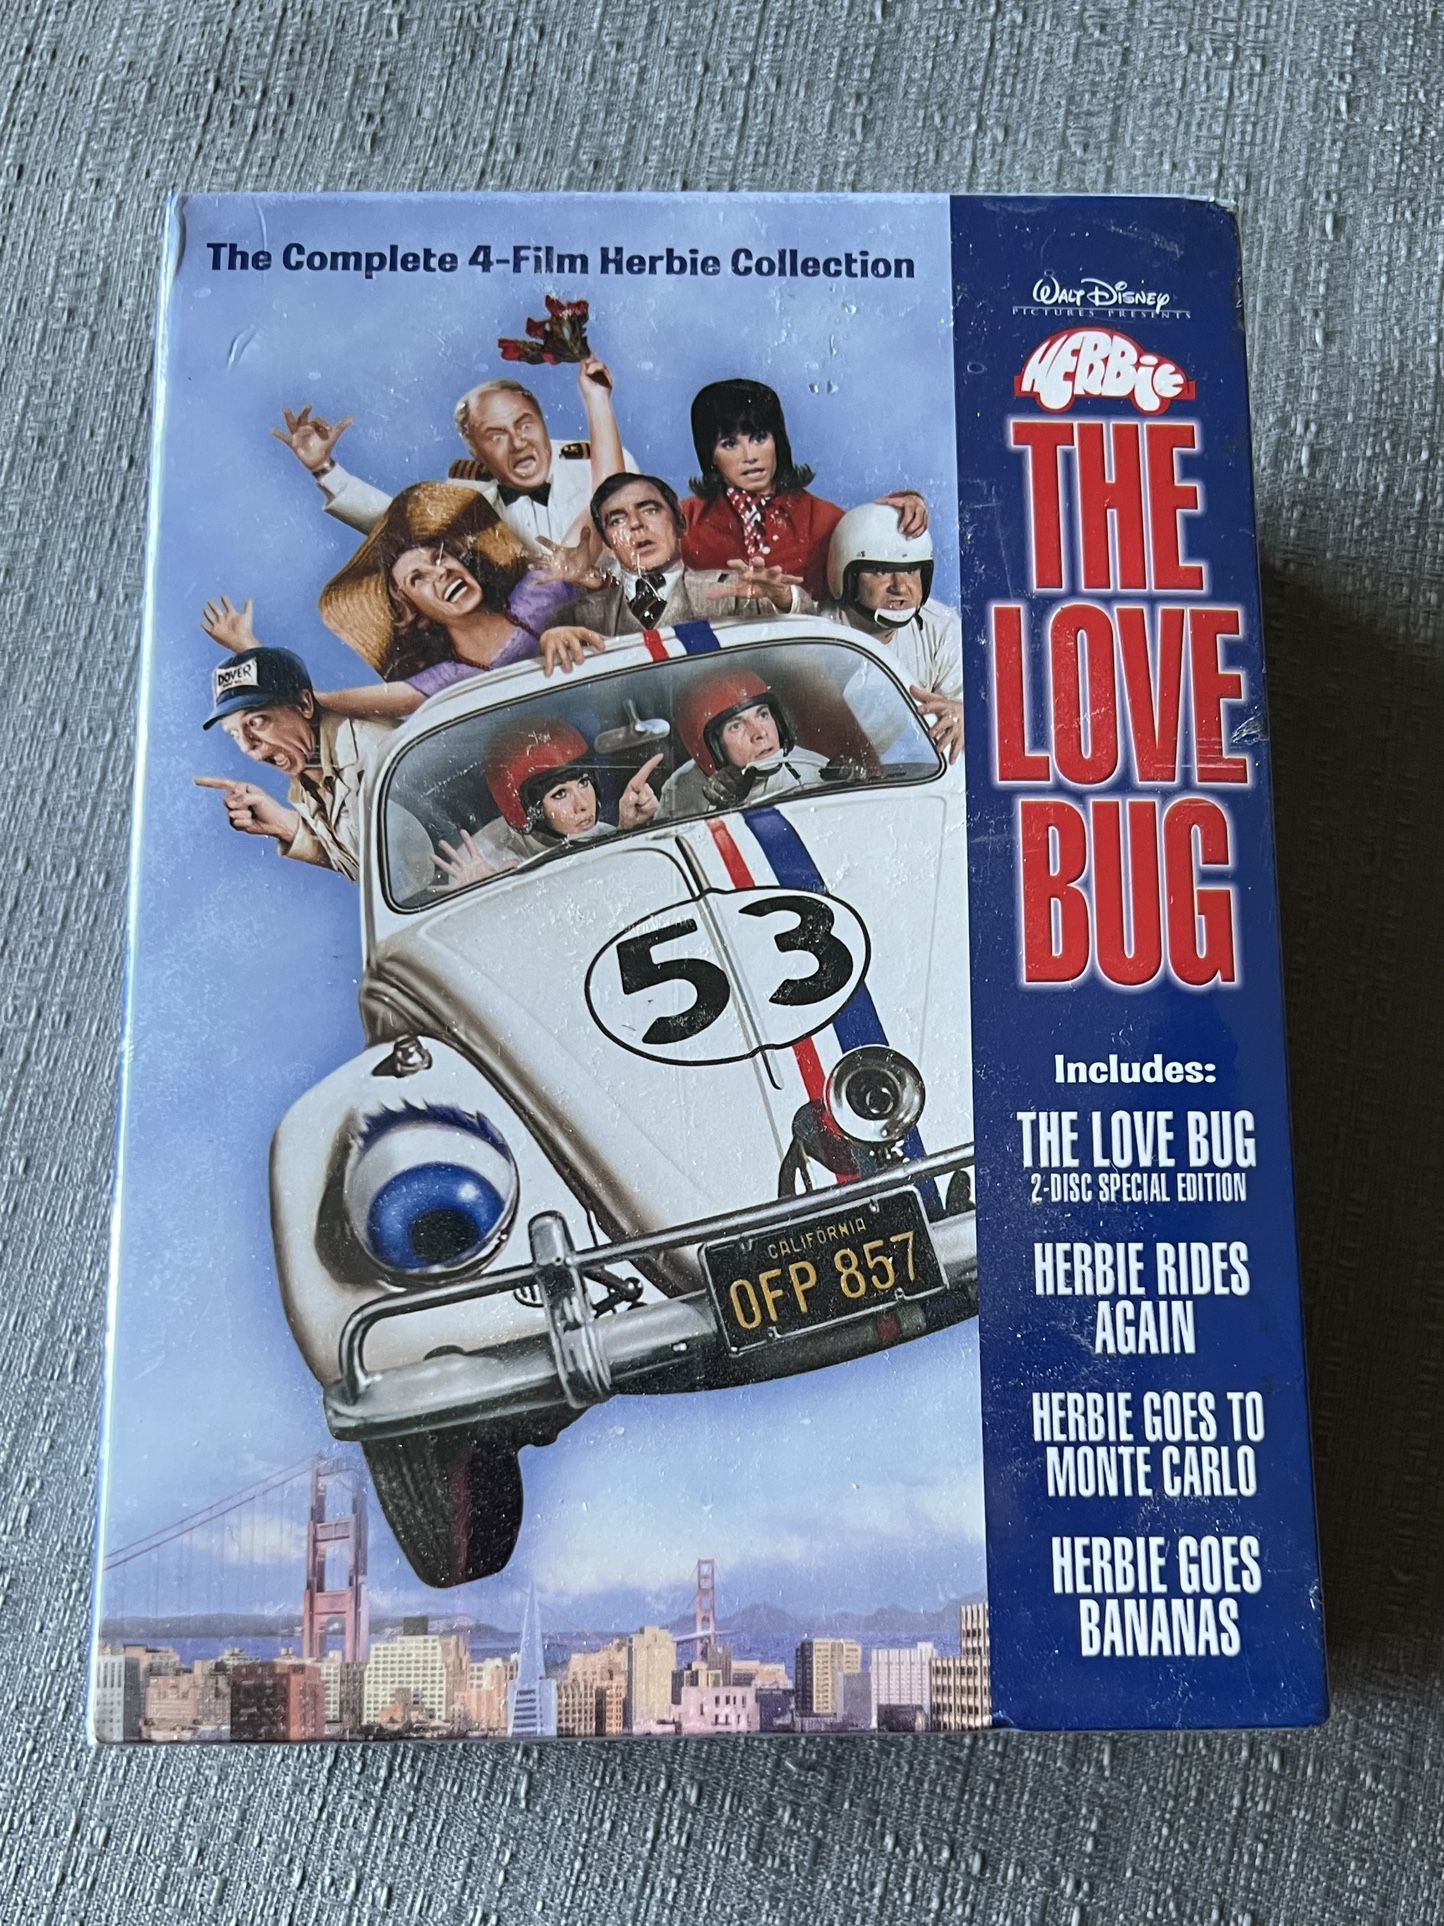 WALT DISNEY HERBIE THE LOVE BUG - 4 FILM COLLECTION DVD BOXSET! 